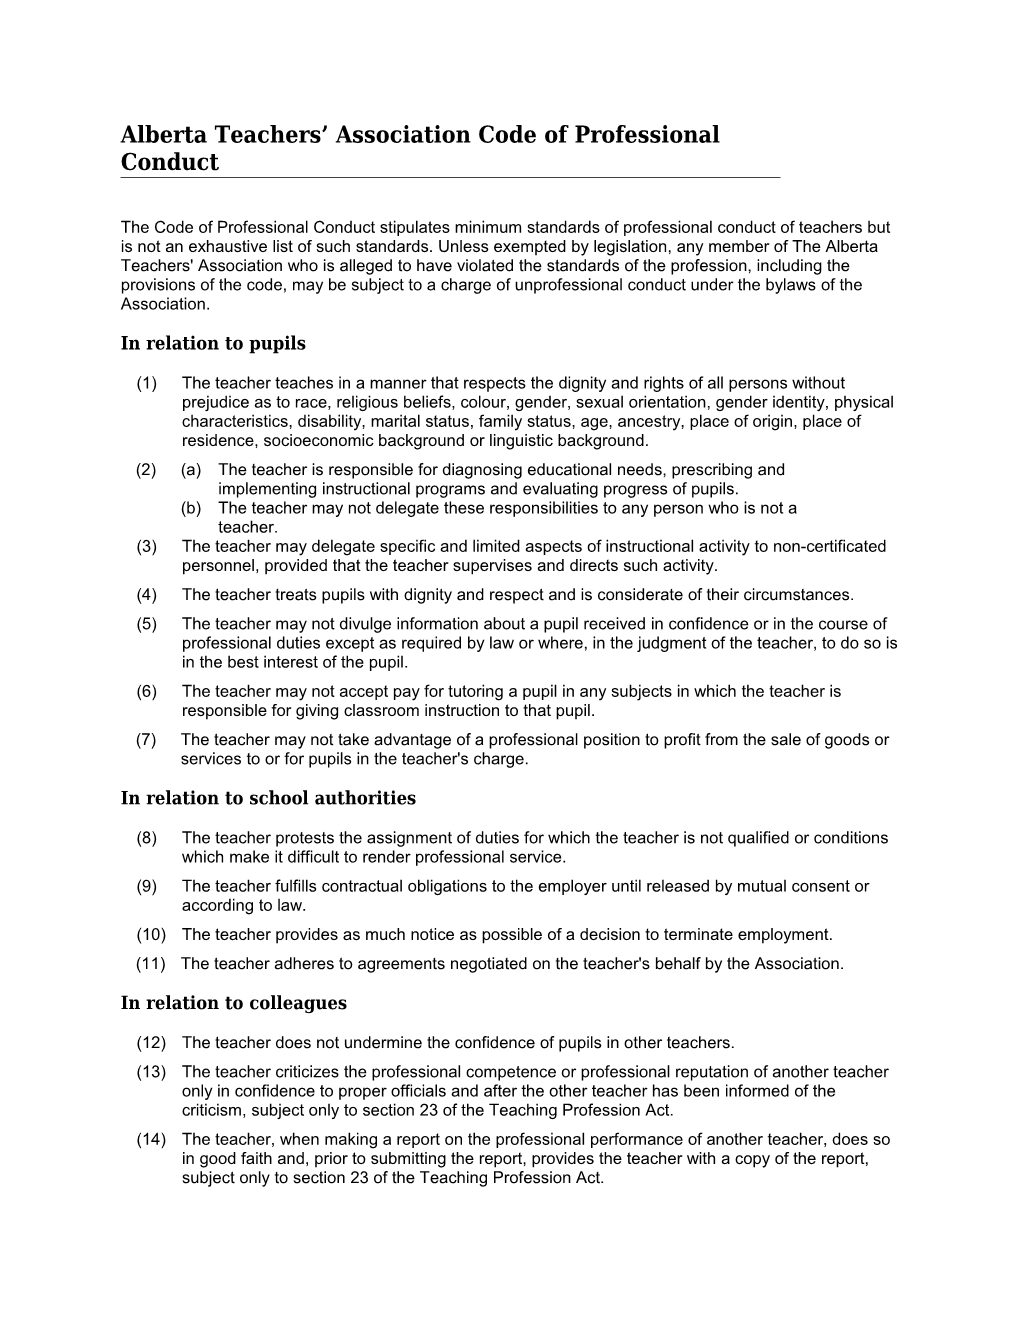 Alberta Teachers Association Code of Professional Conduct